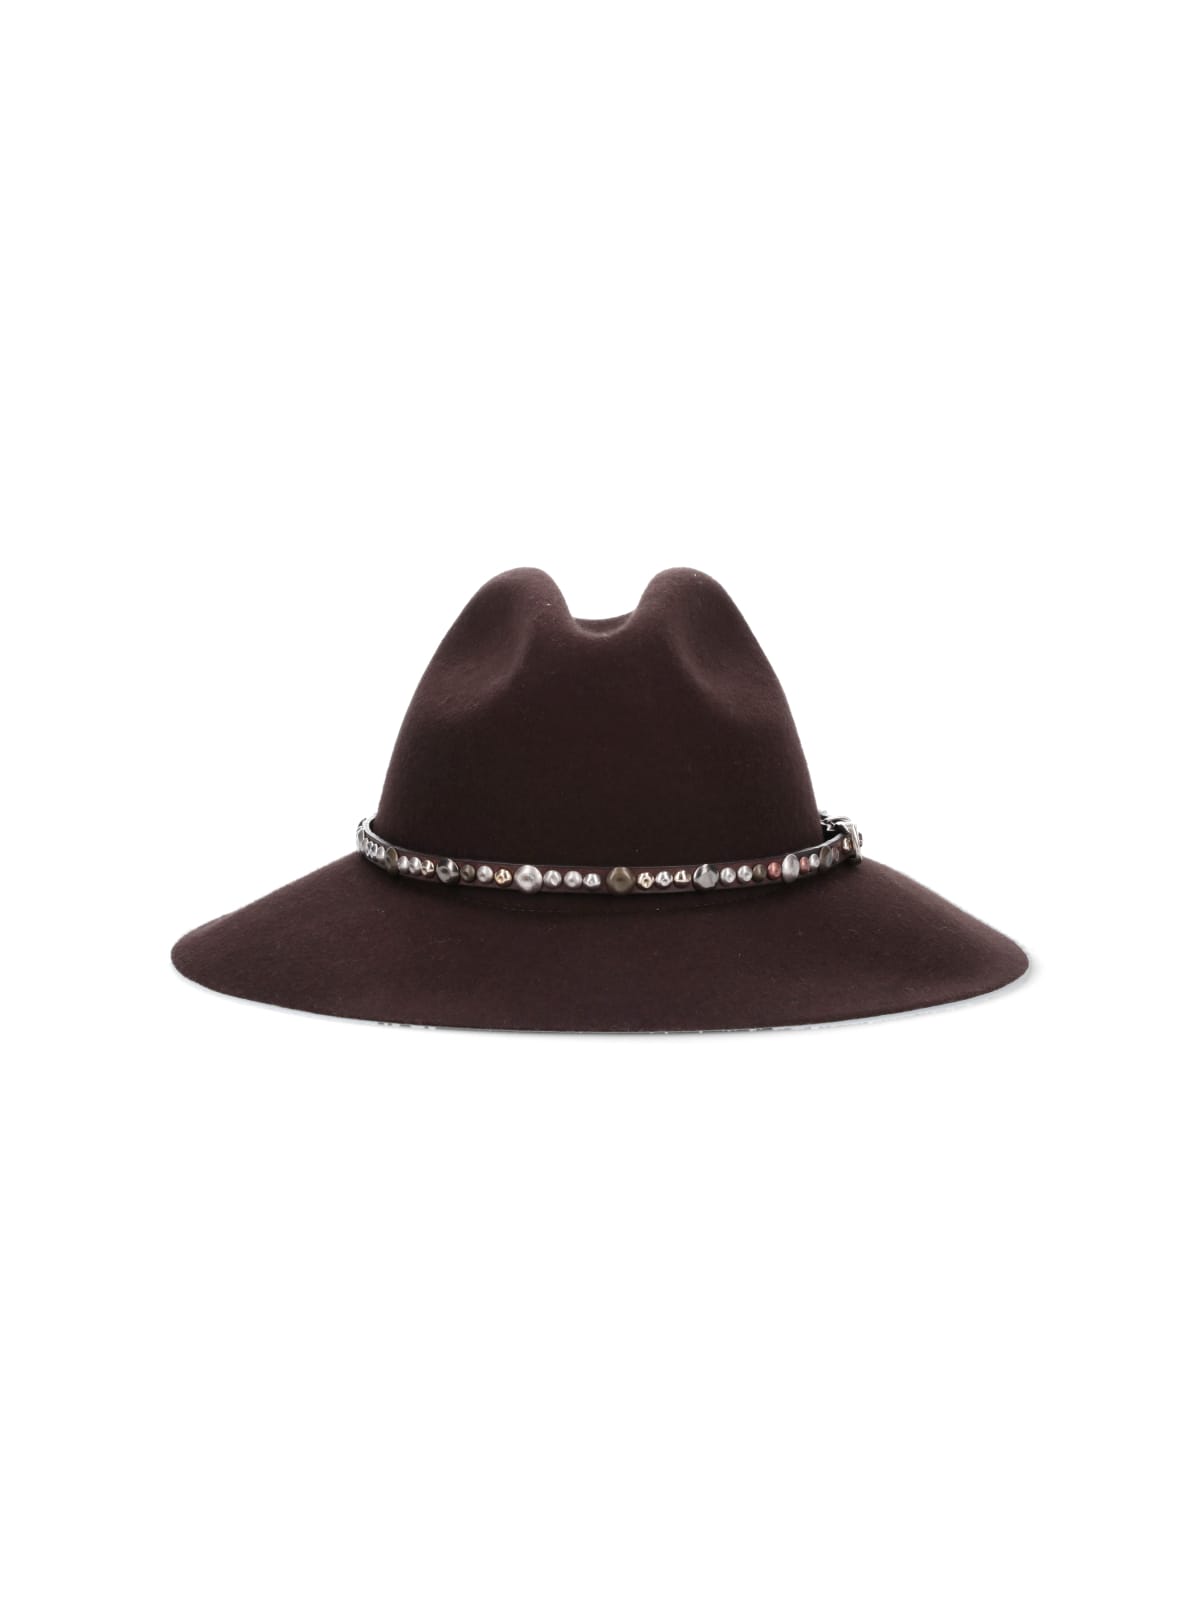 Golden Fedora Hat Felt With Studded Leather Belt